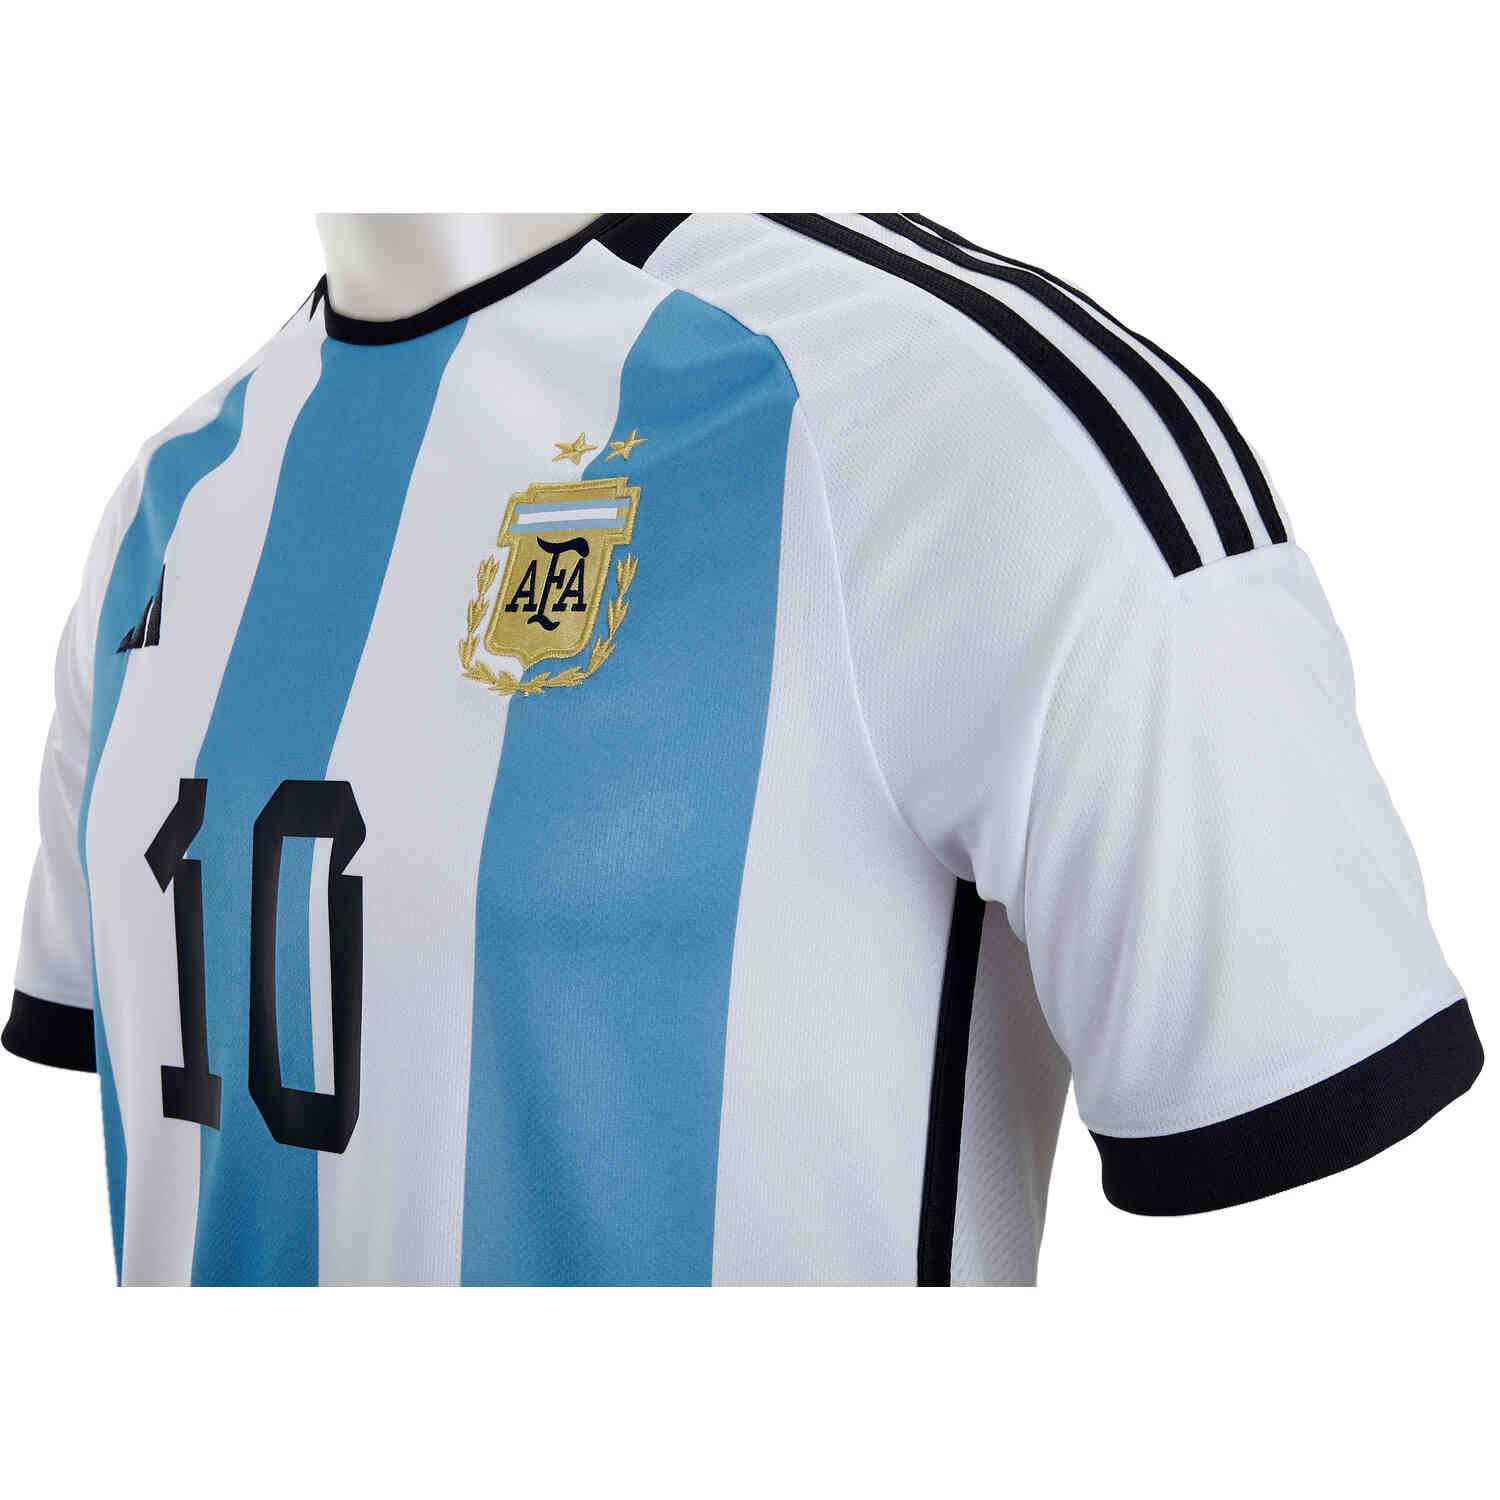 Argentina home jersey: Adidas x Argentina National football team